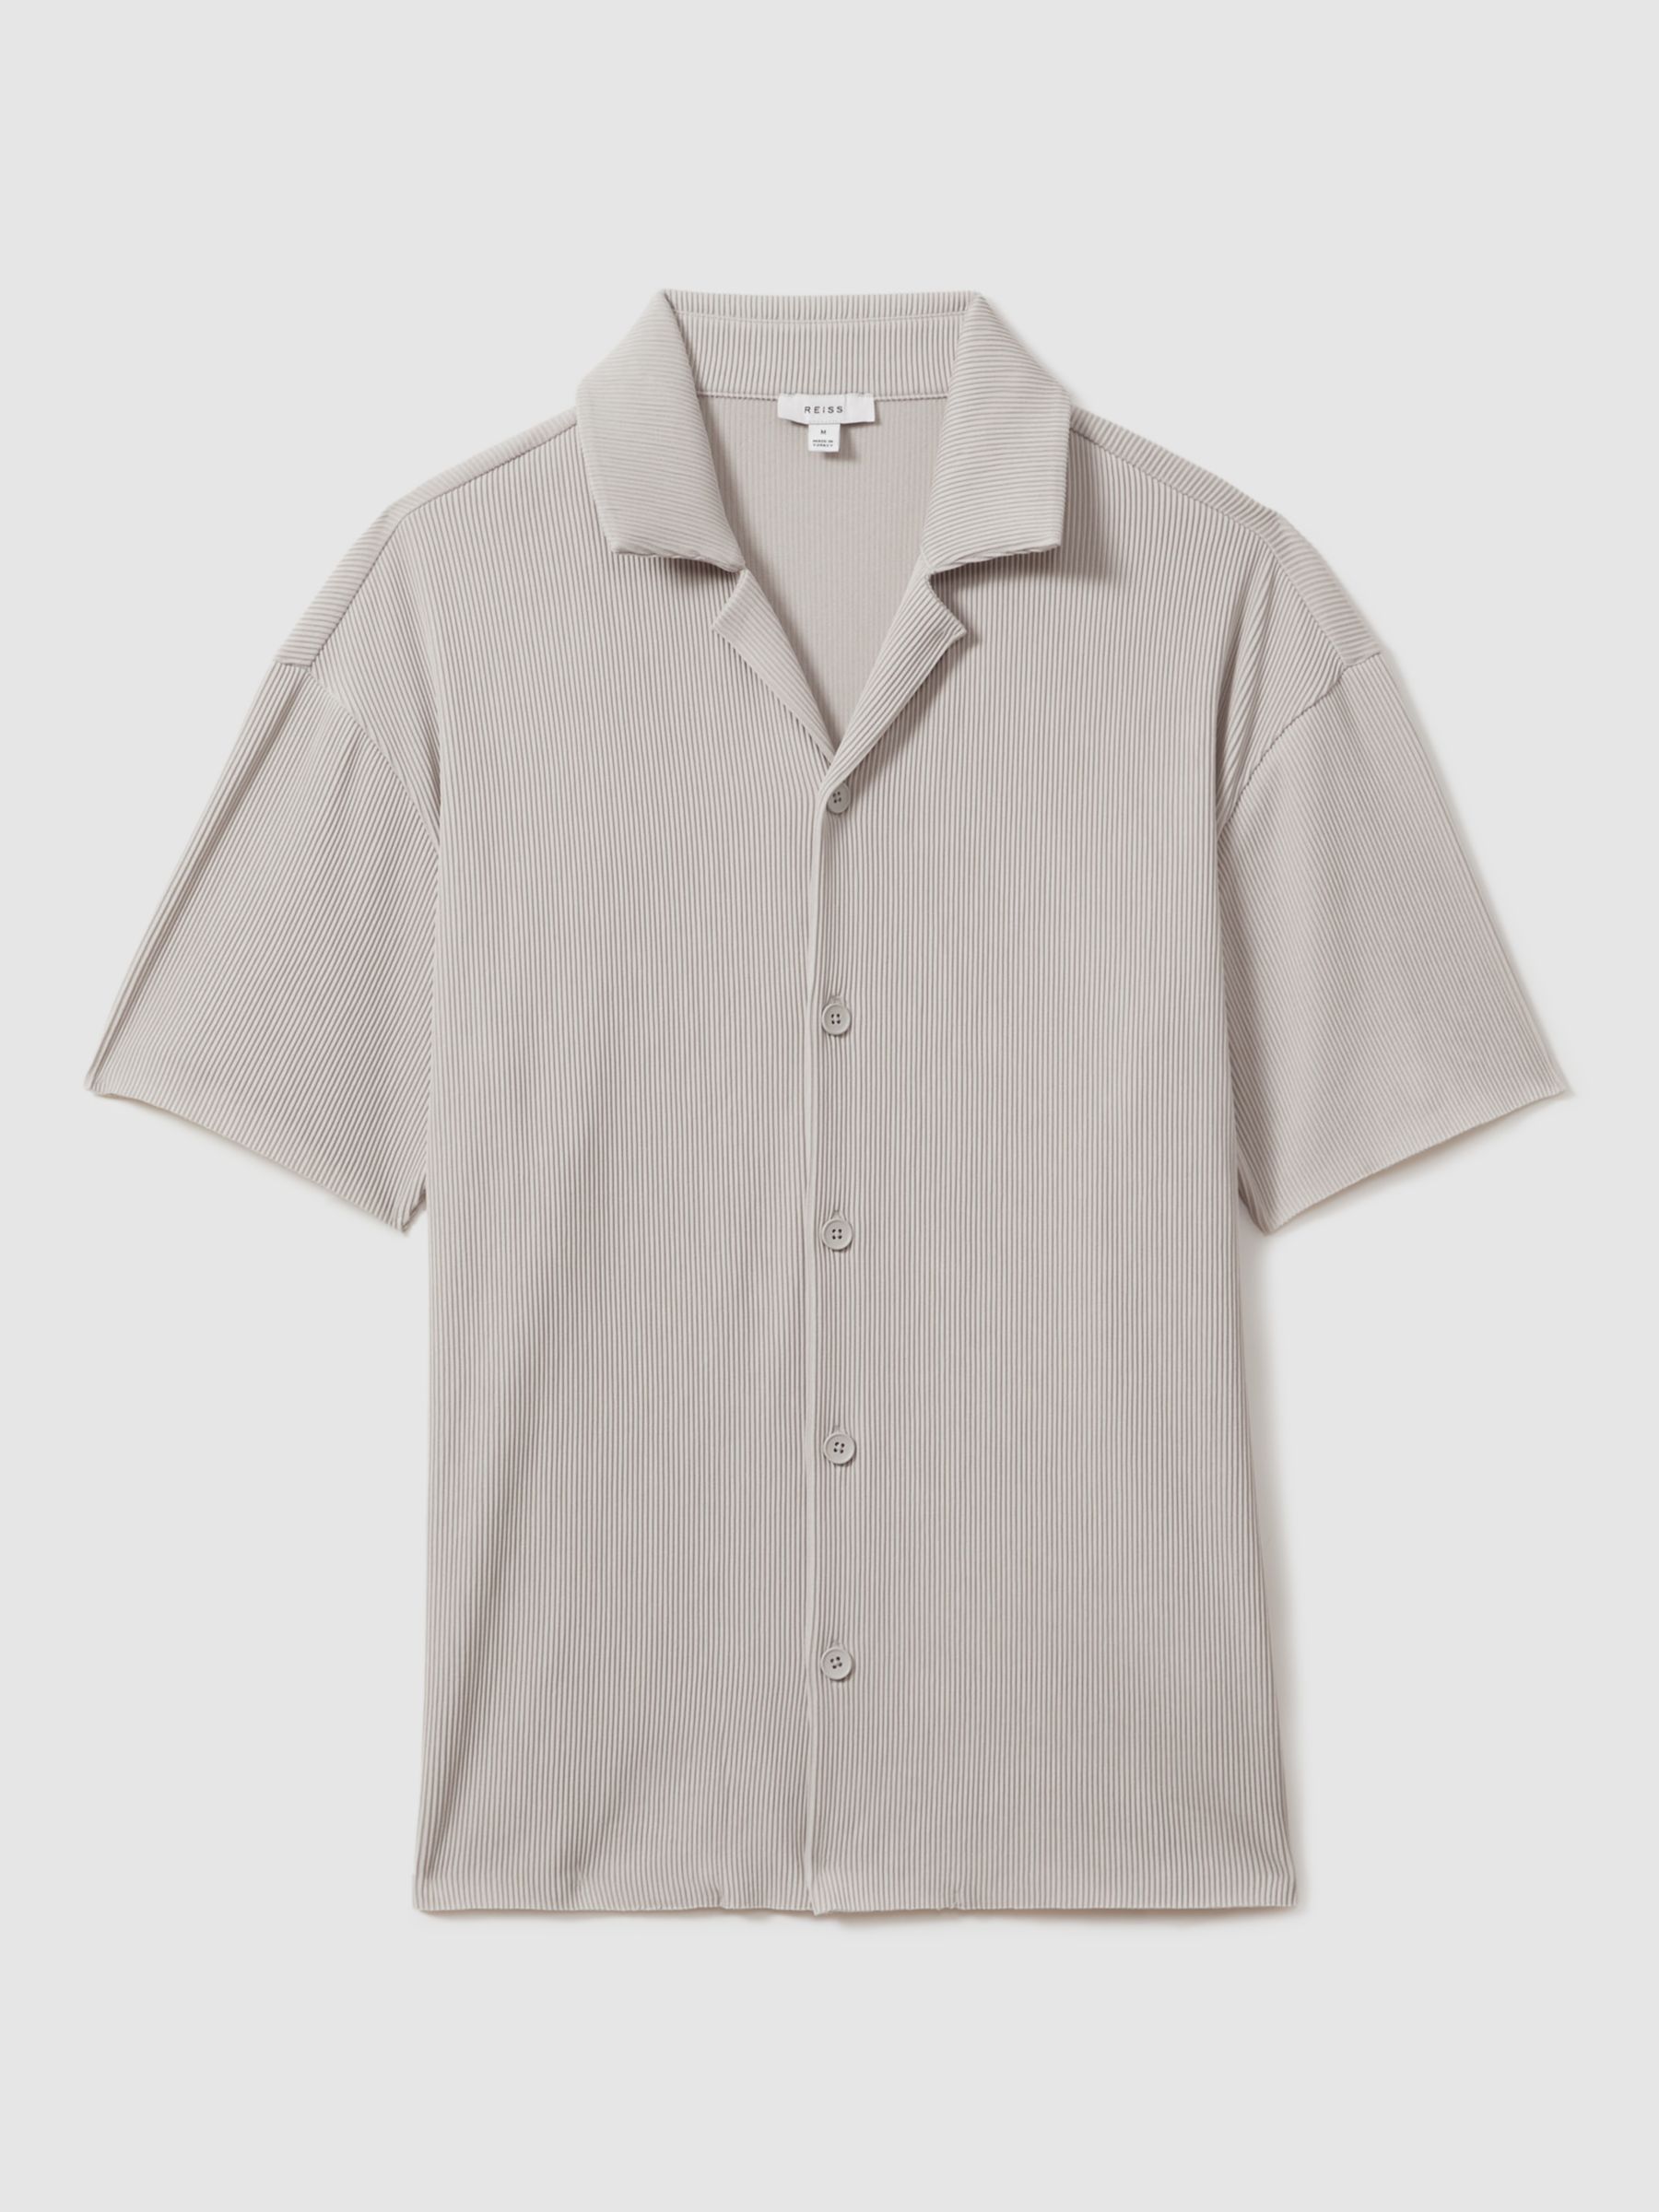 Buy Reiss Chase Rib Textured Short Sleeve Shirt Online at johnlewis.com